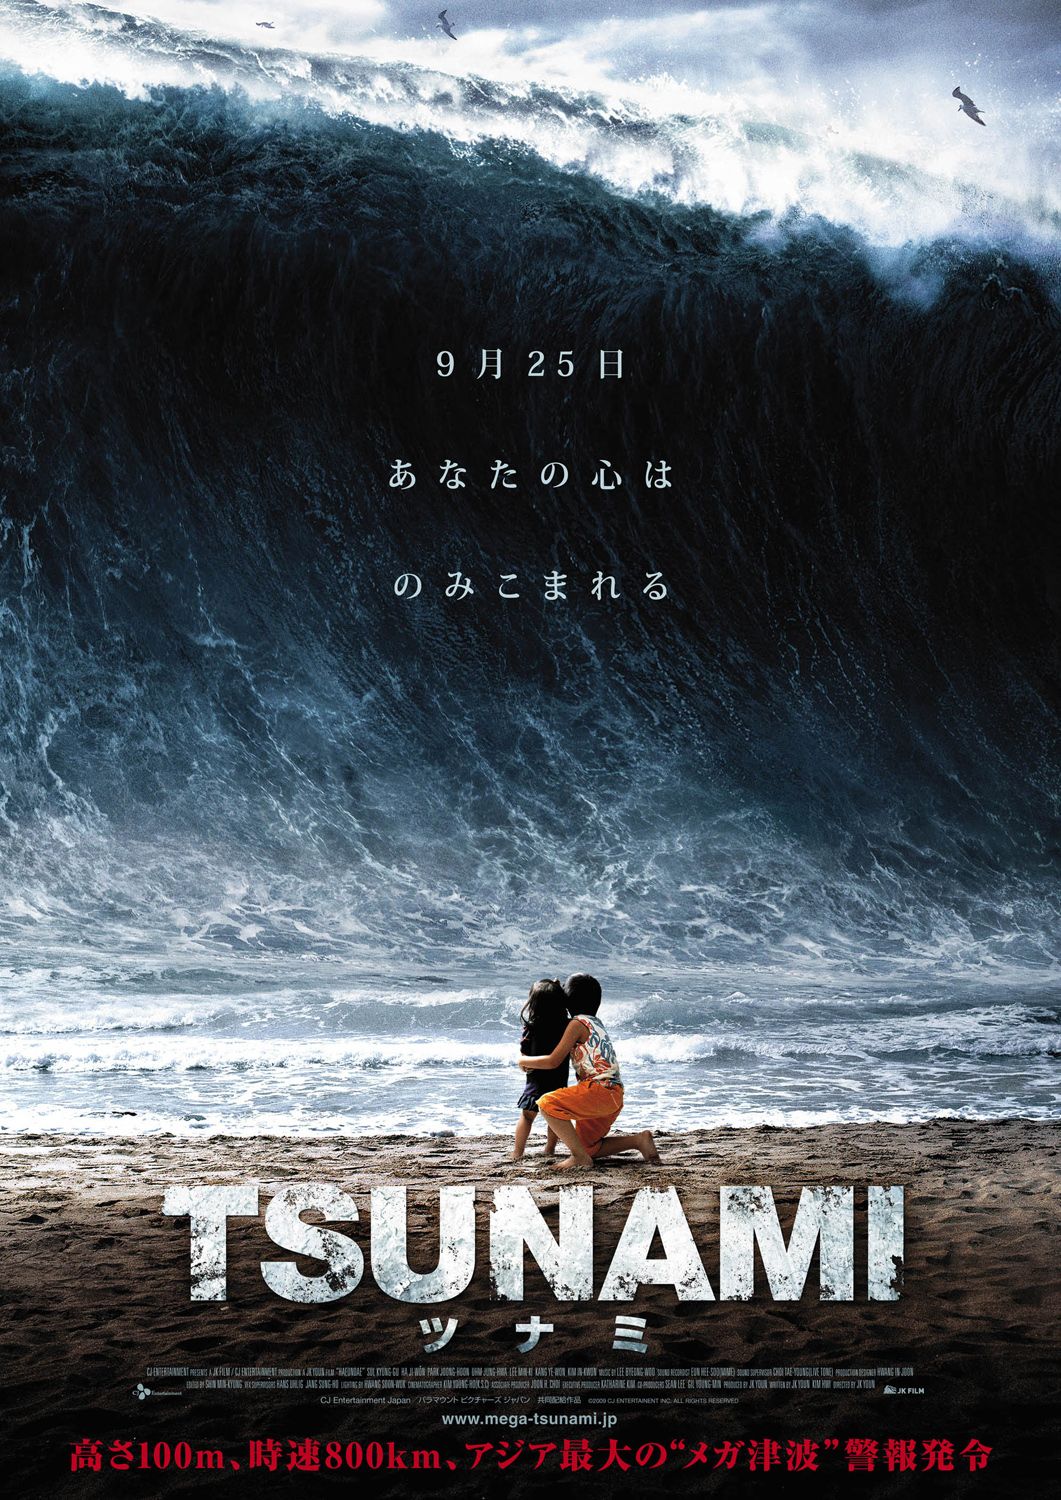 Tsunamiden Kaçış